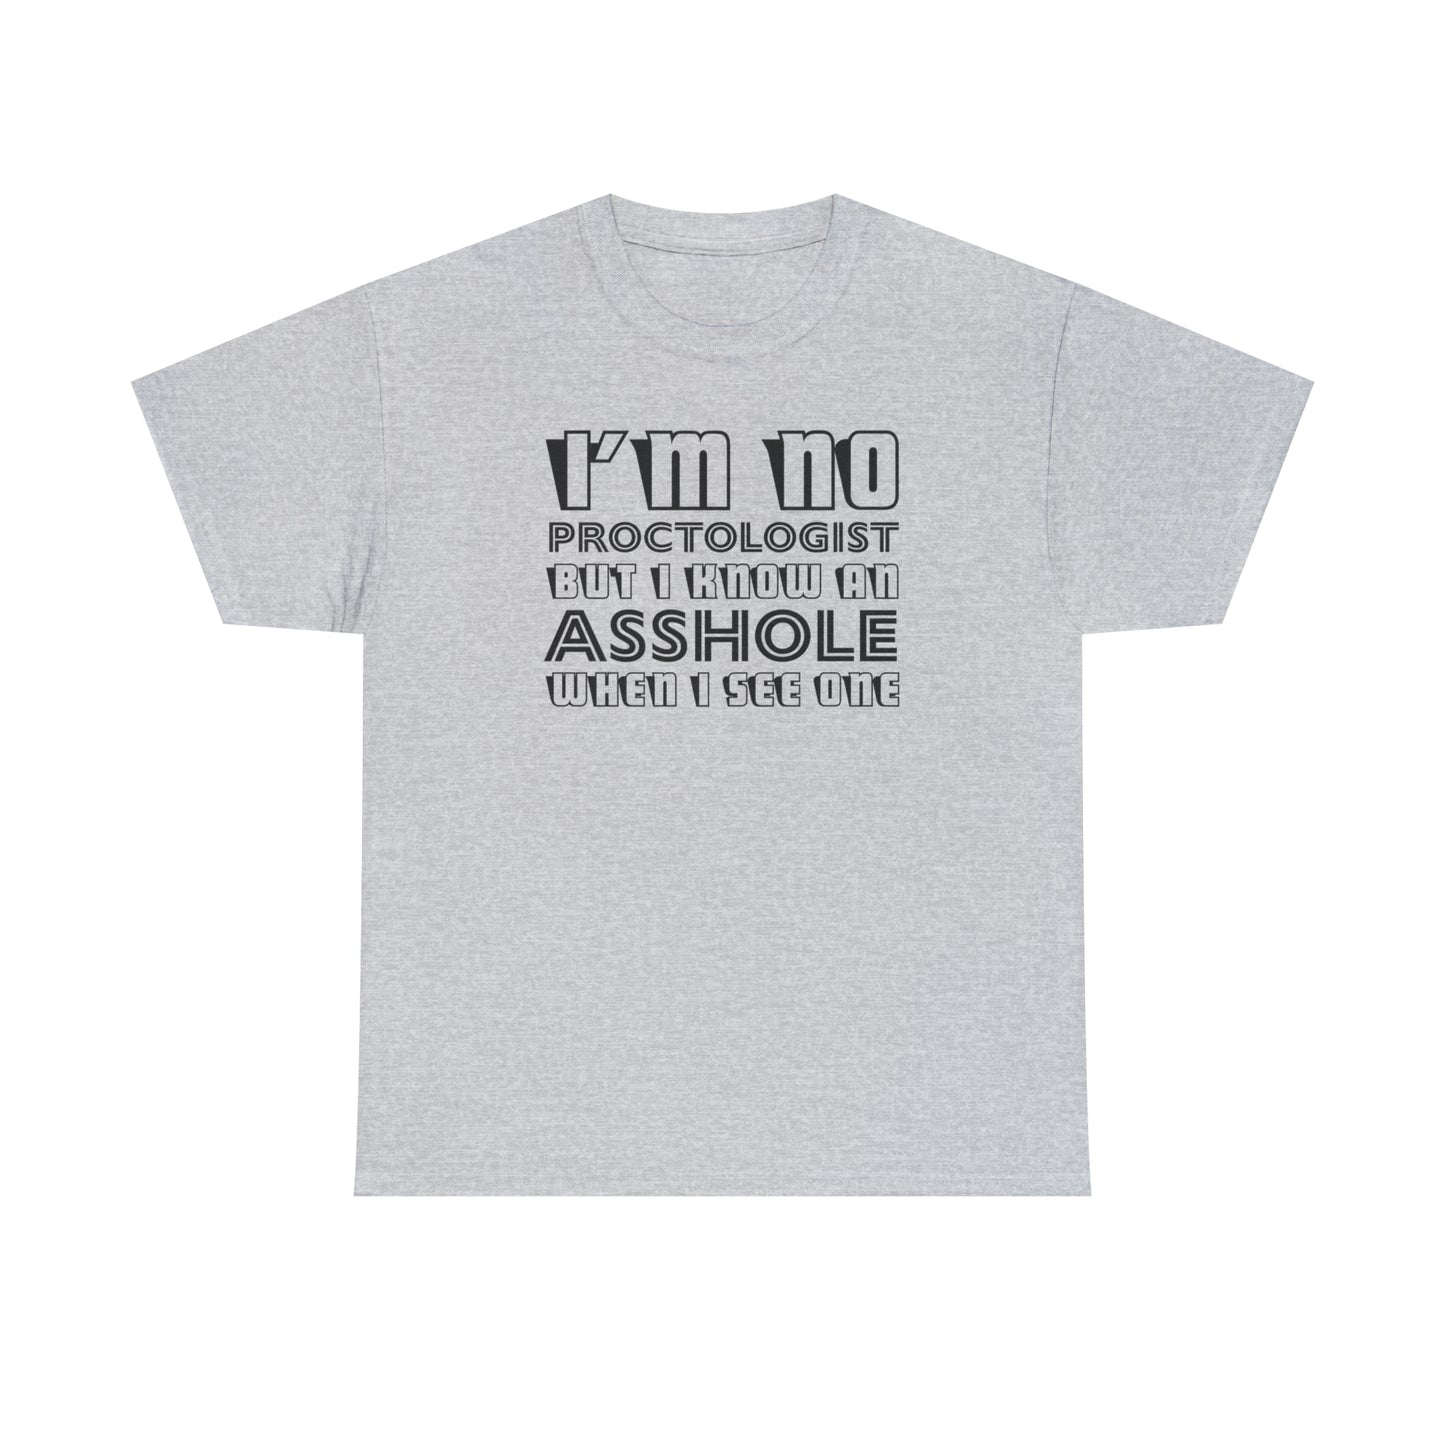 Sarcastic T-Shirt For Proctologist T Shirt Dry Humor TShirt for Asshole Shirt For Funny Gift Shirt Explicit Shirt Uncensored Shirt